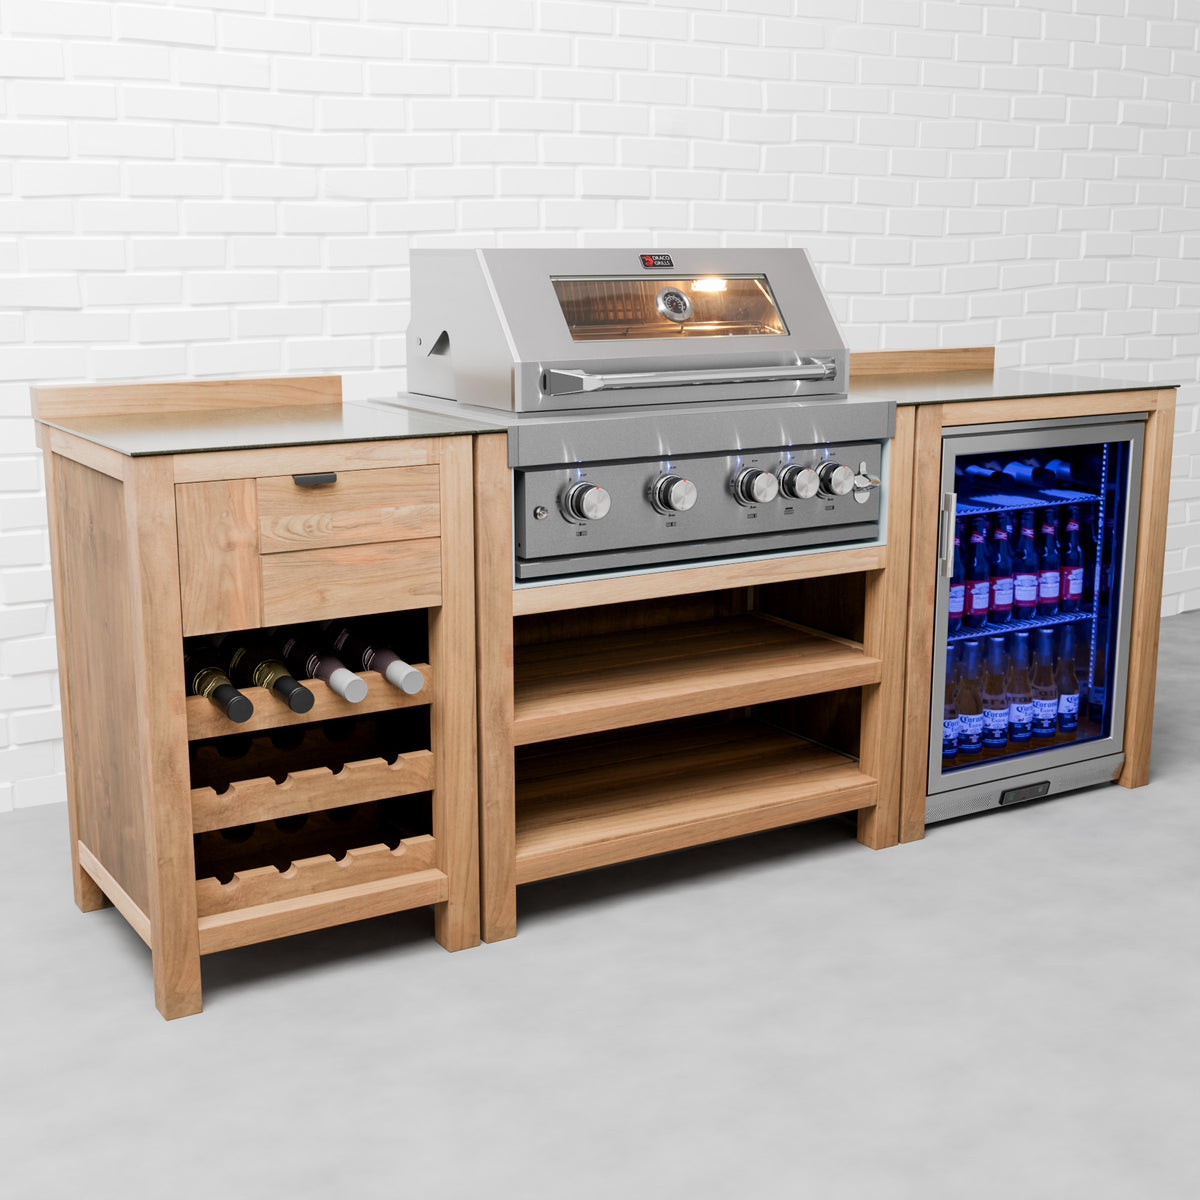 Draco Grills Teak 4 Burner Outdoor Kitchen with Modular Wine Cabinet and Single Fridge